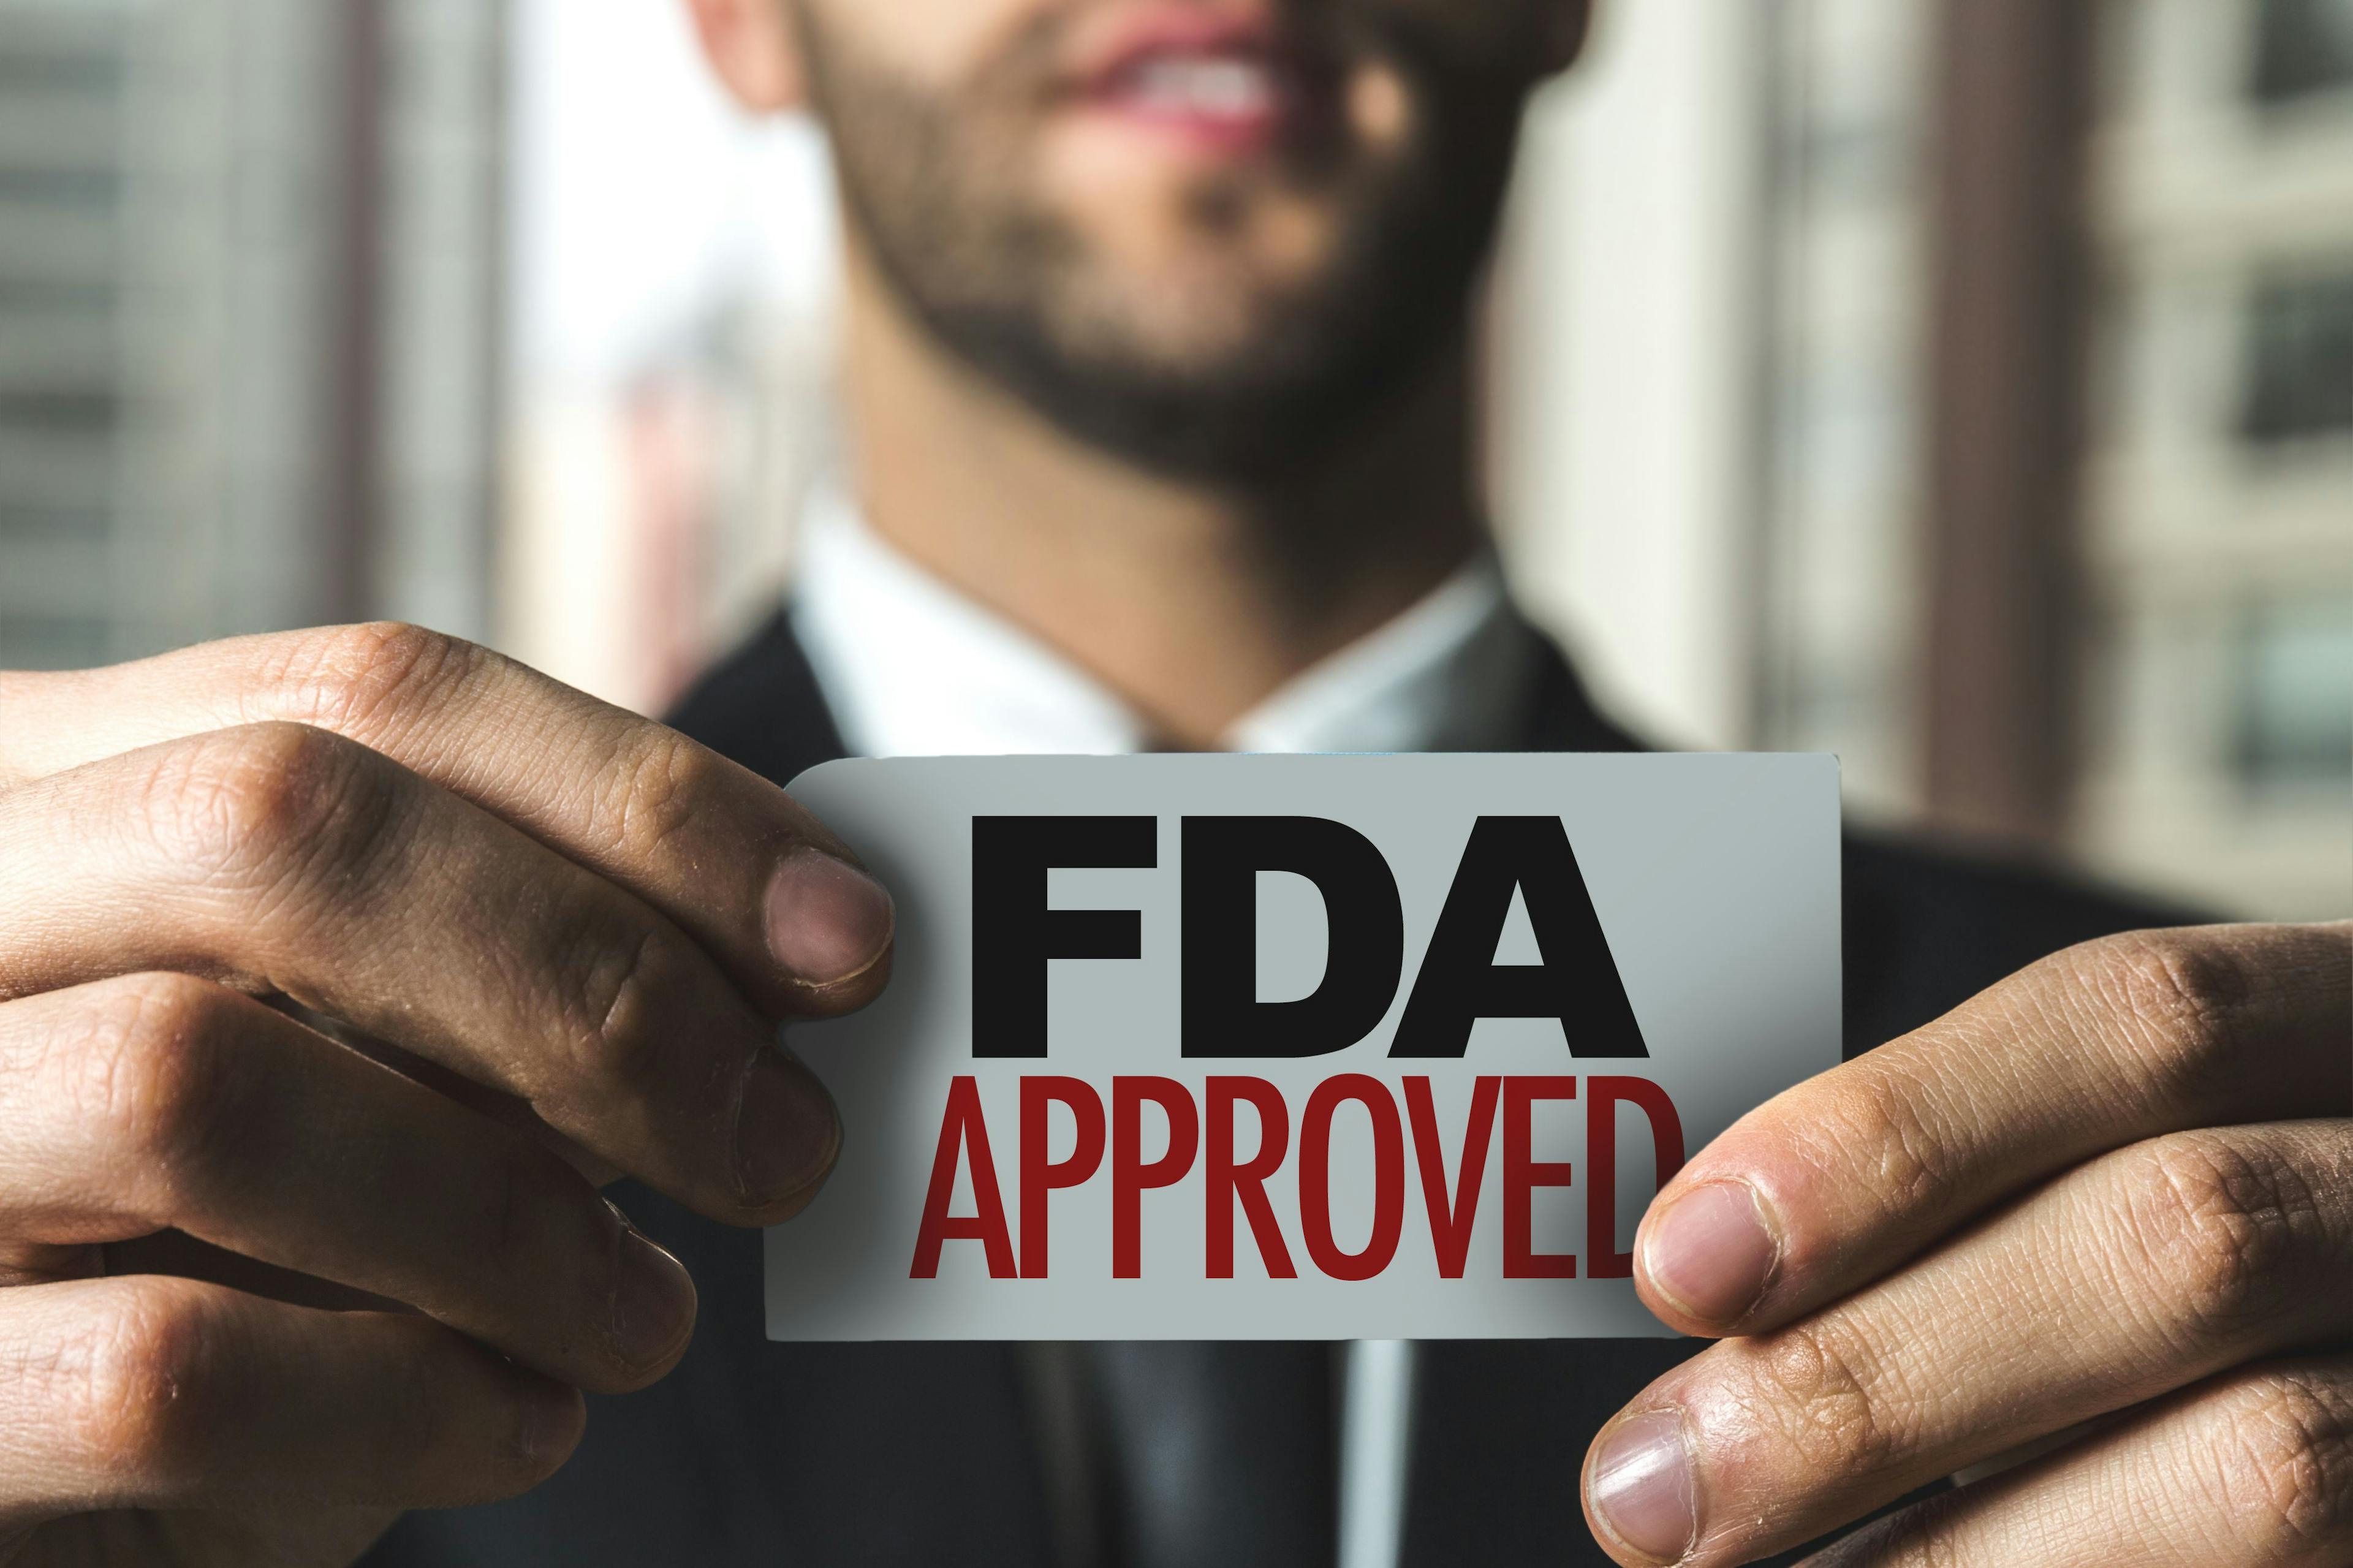 FDA approved | Image credit: gustavofrazao - stock.adobe.com